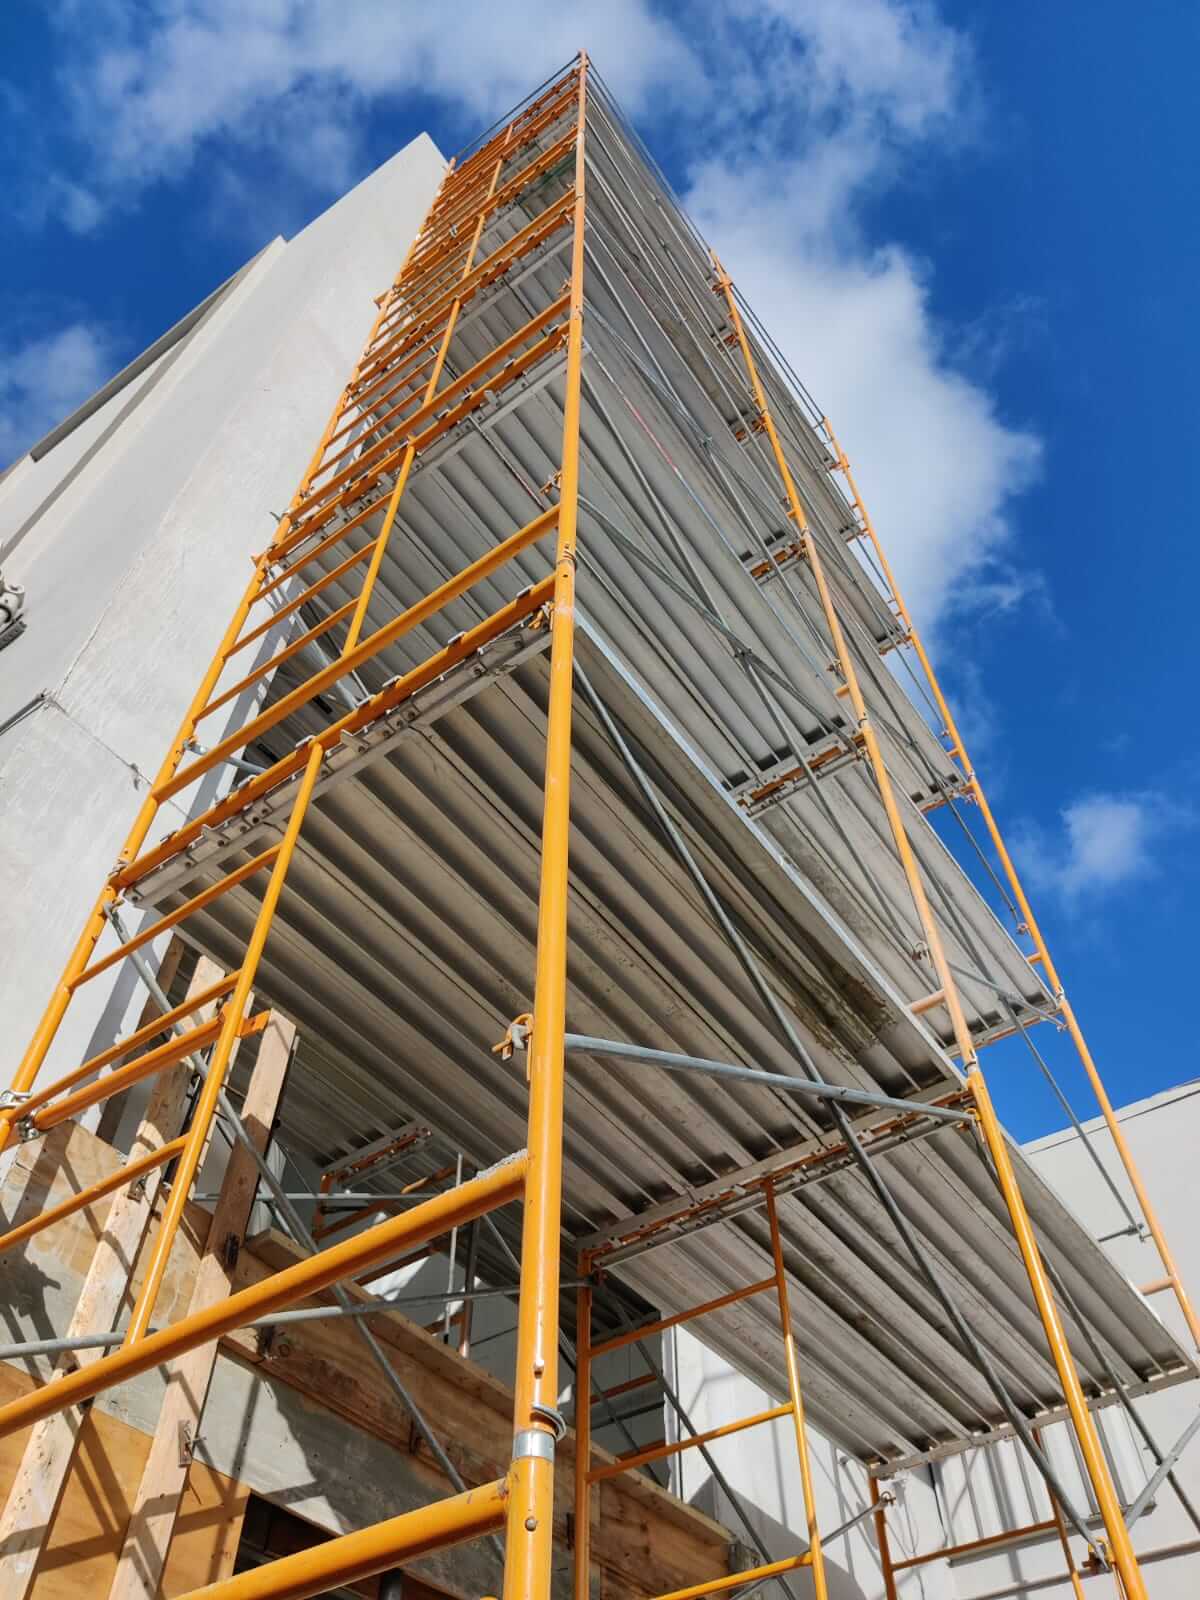 price of scaffolding rental